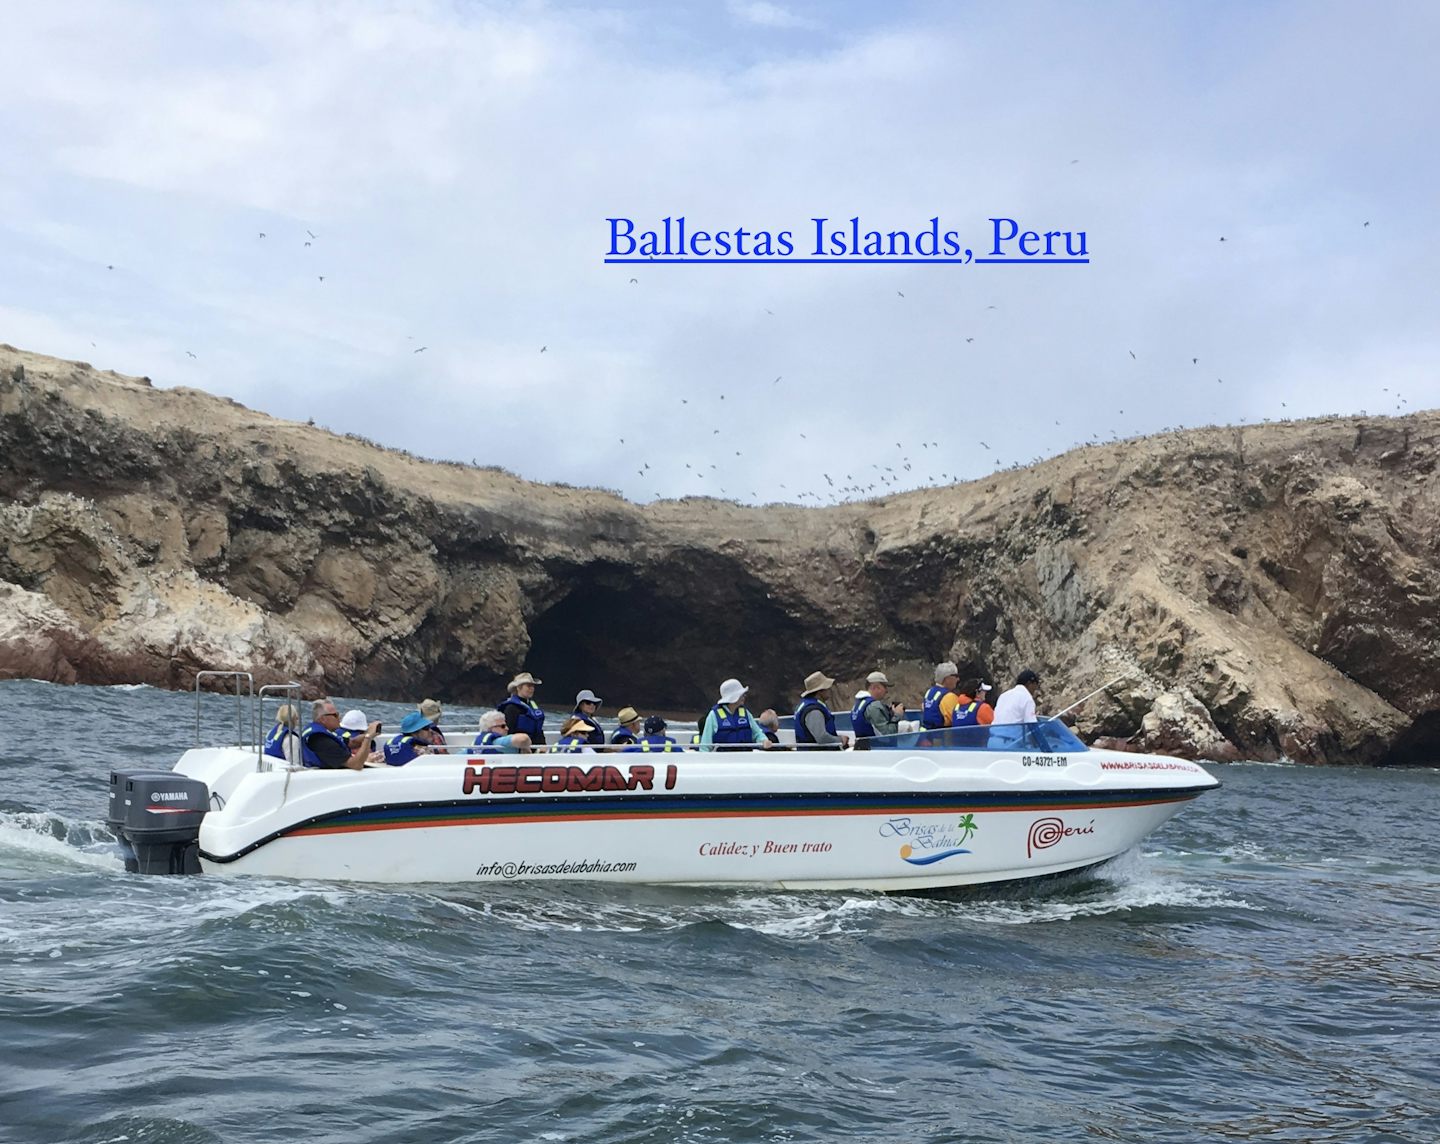 Ballestas Islands tour in Peru